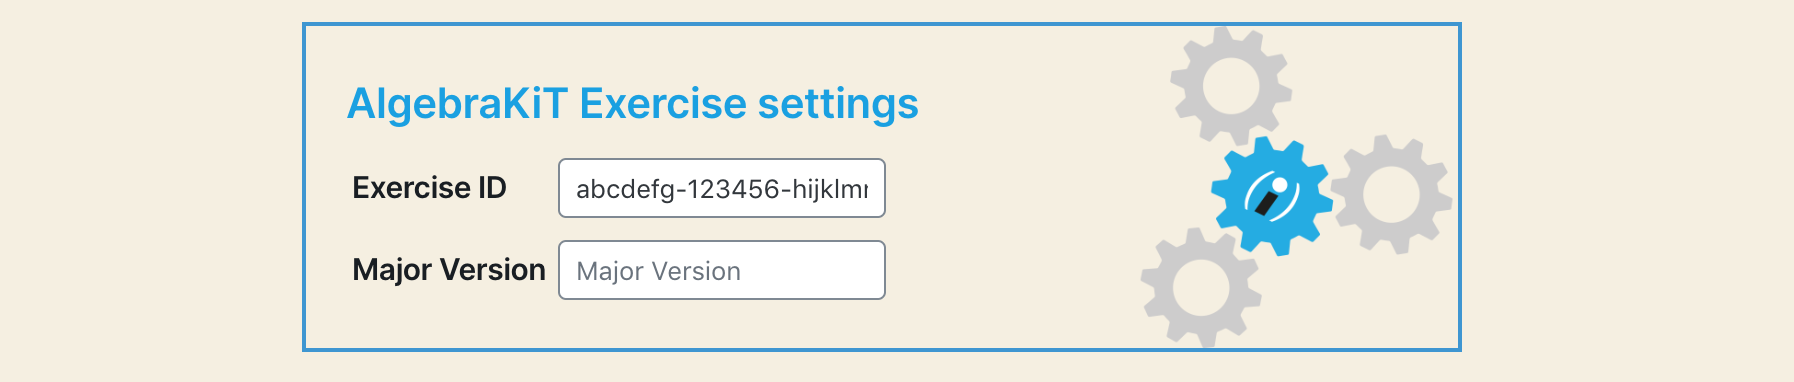 The Algebrakit settings page